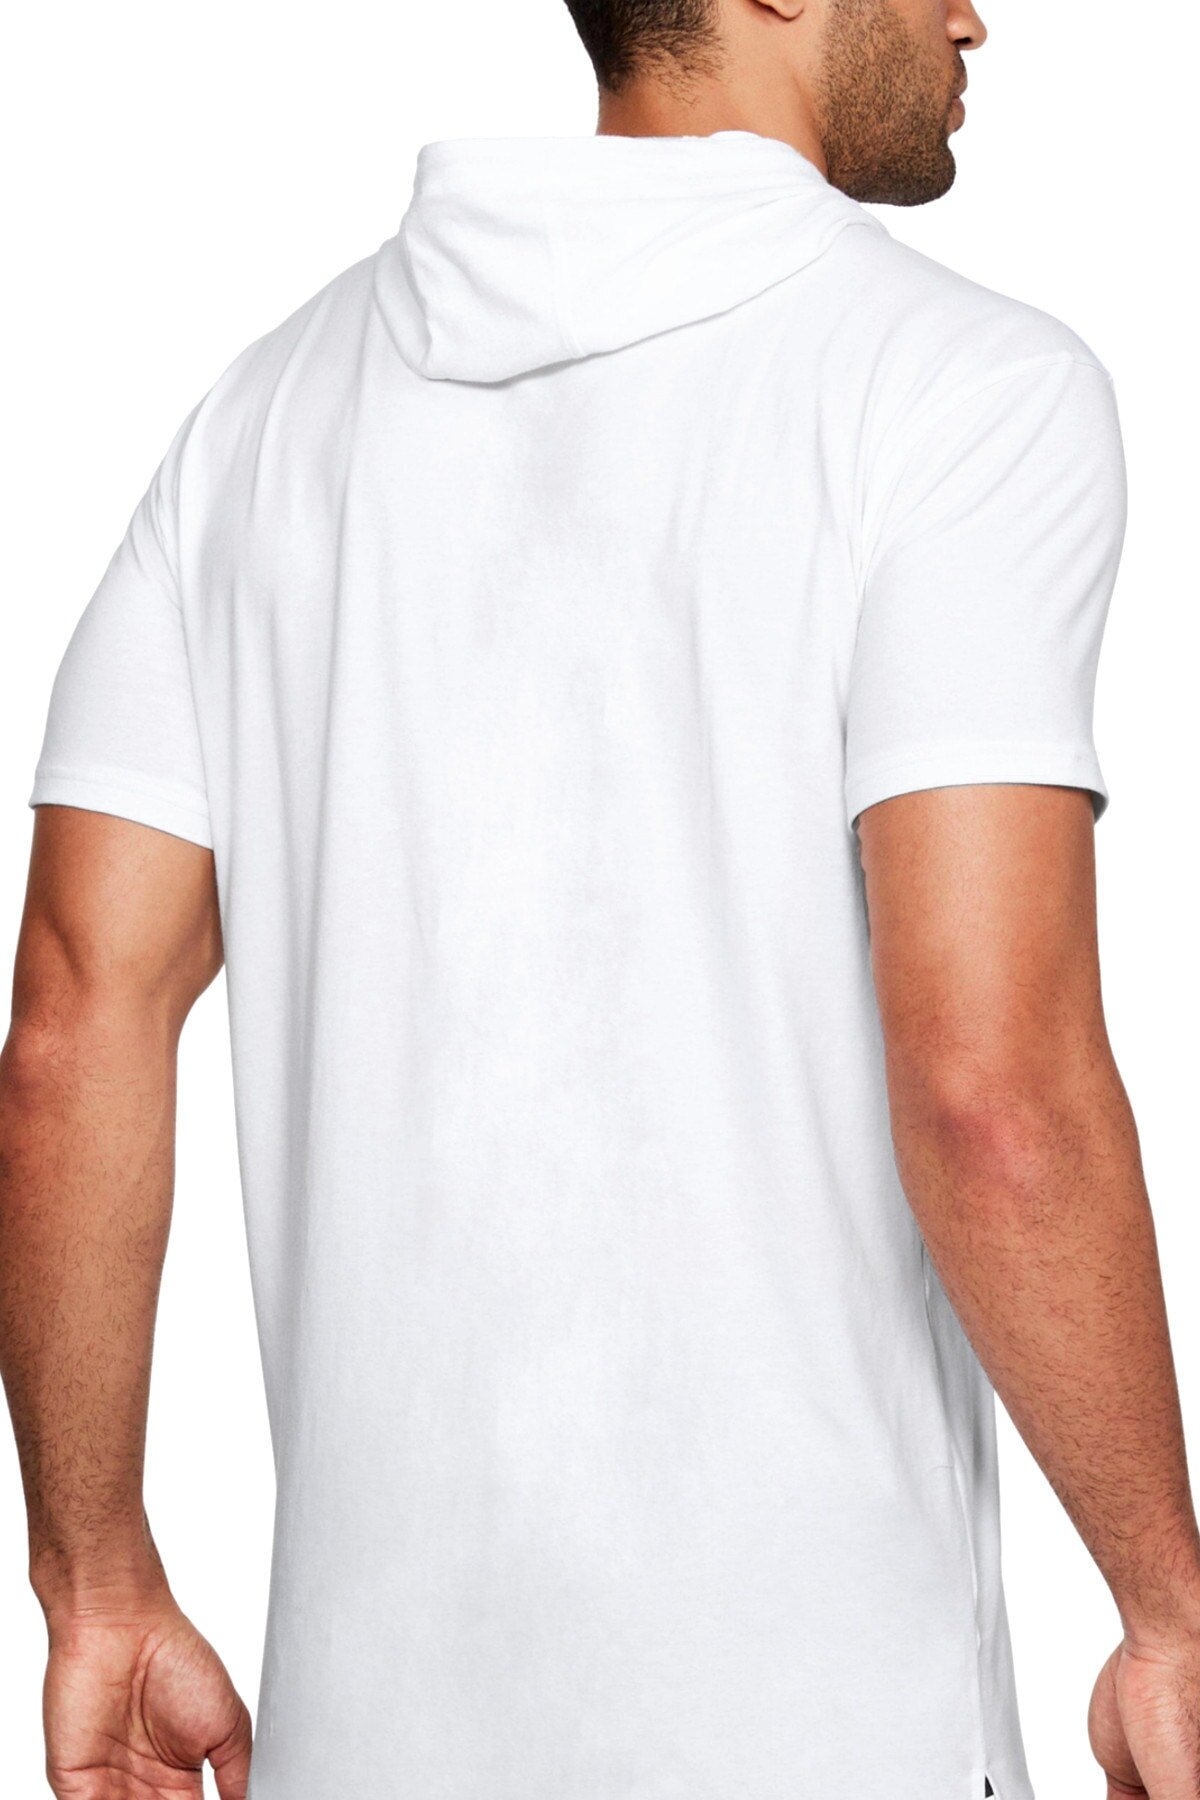 Tek Göz Beyaz Kapşonlu Kısa Kollu Erkek T-shirt